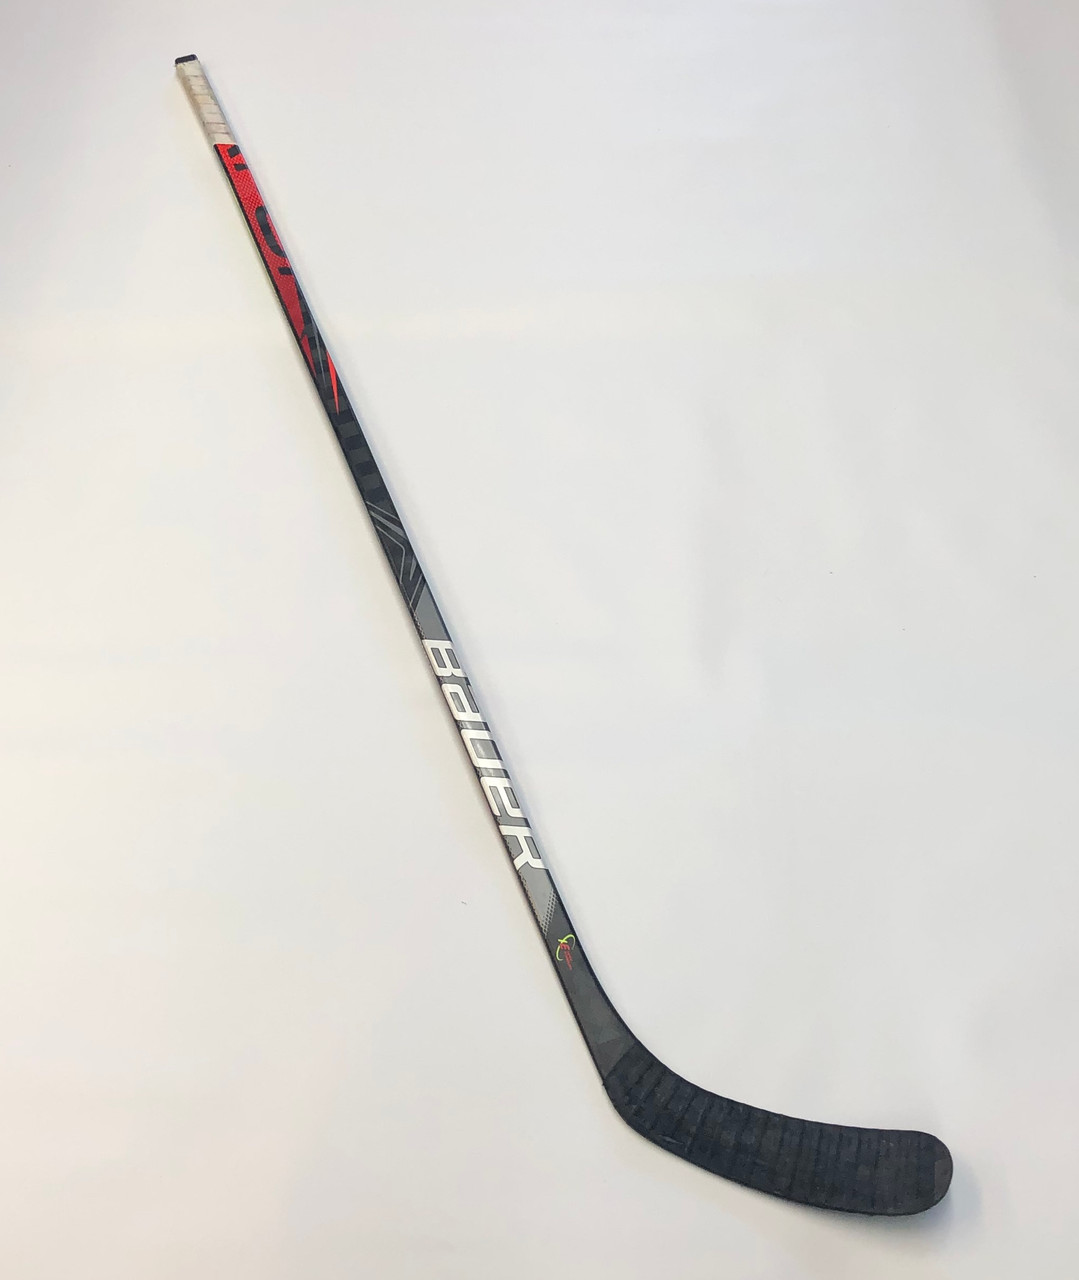 Refurb* Bauer Vapor Flylite LH Pro Stock Stick Grip Used P28 82 Flex IZO 2  - DK's Hockey Shop